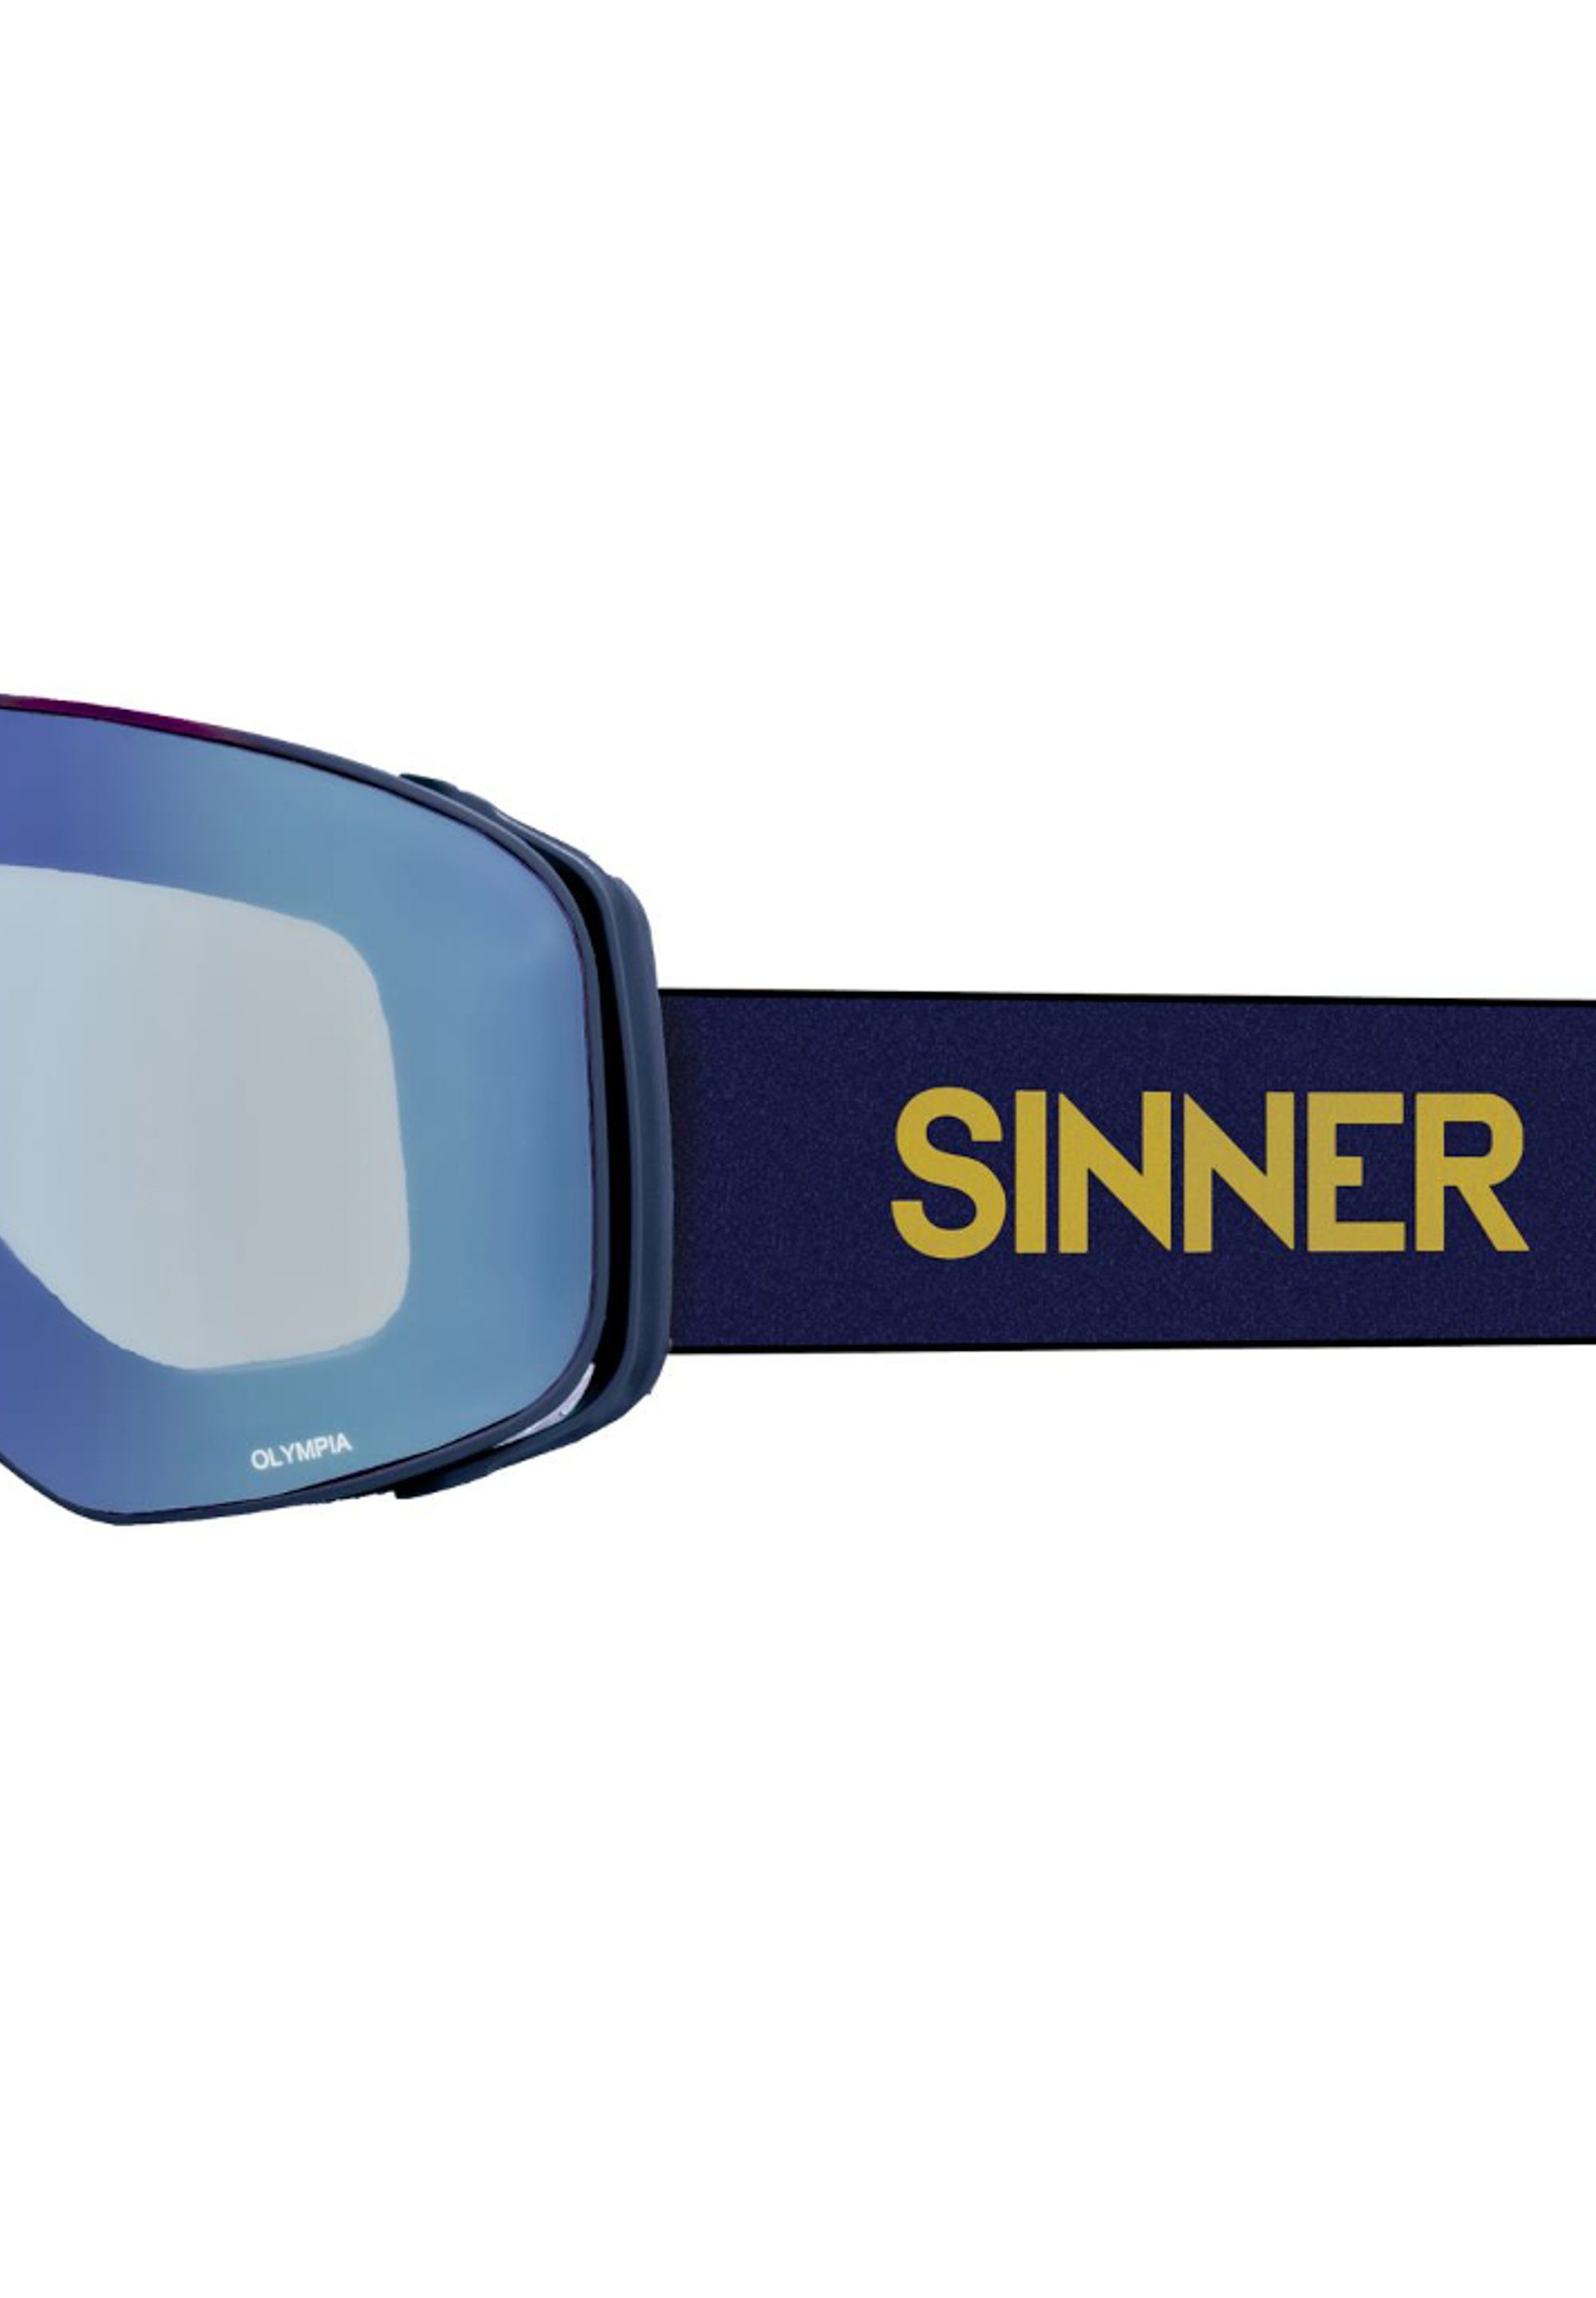 Skibrille Skibrille SINNER blue SINNER